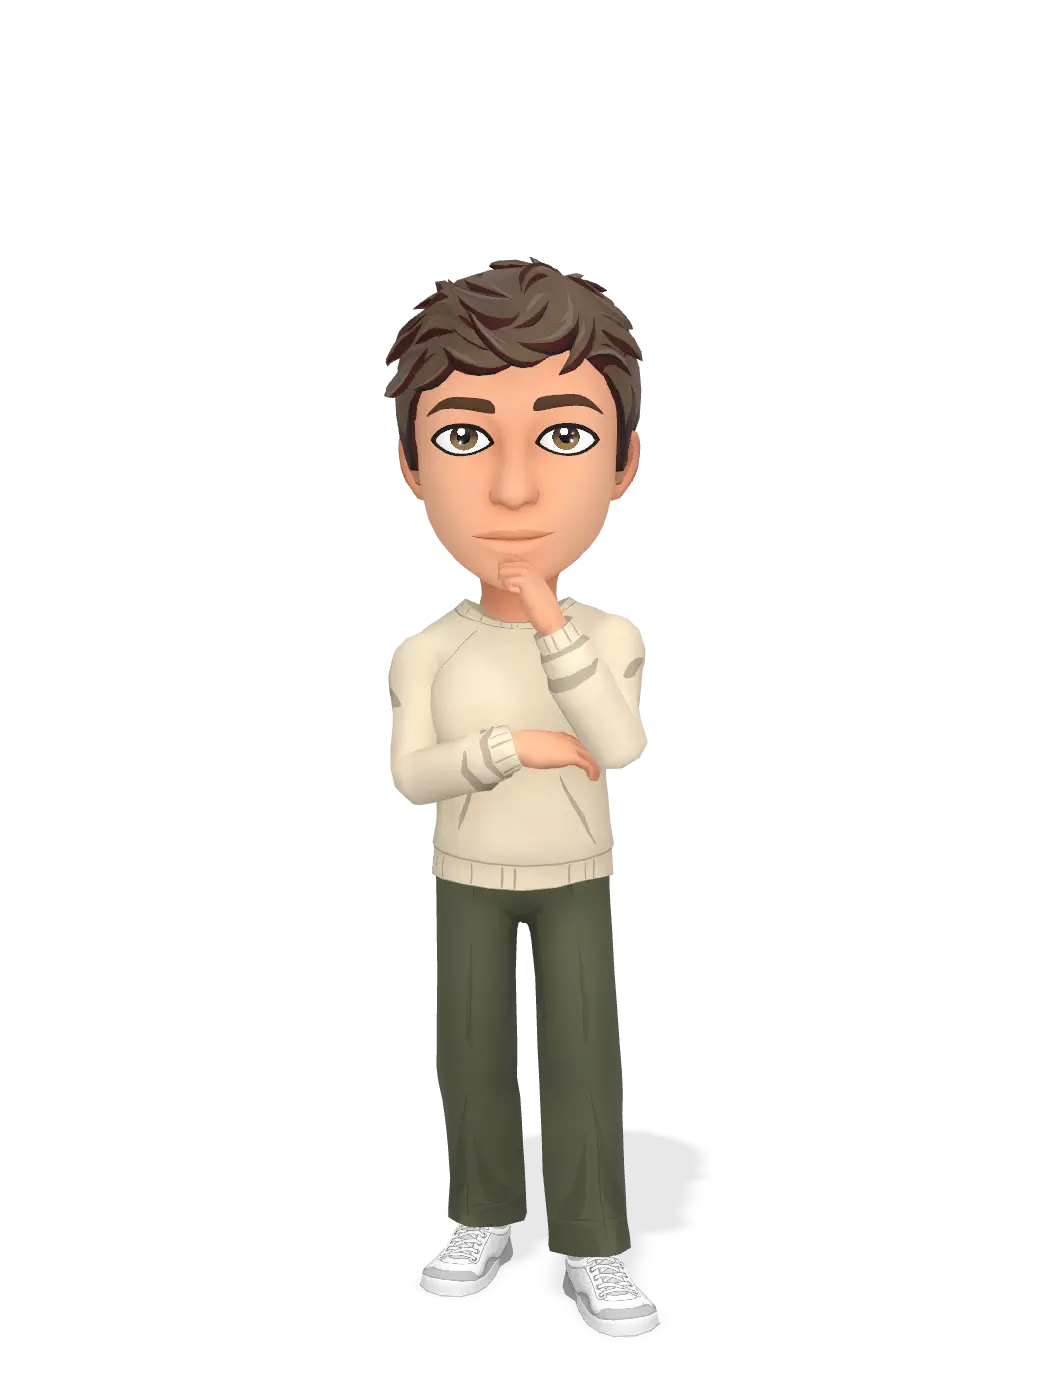 3D Bitmoji for spemder avatar